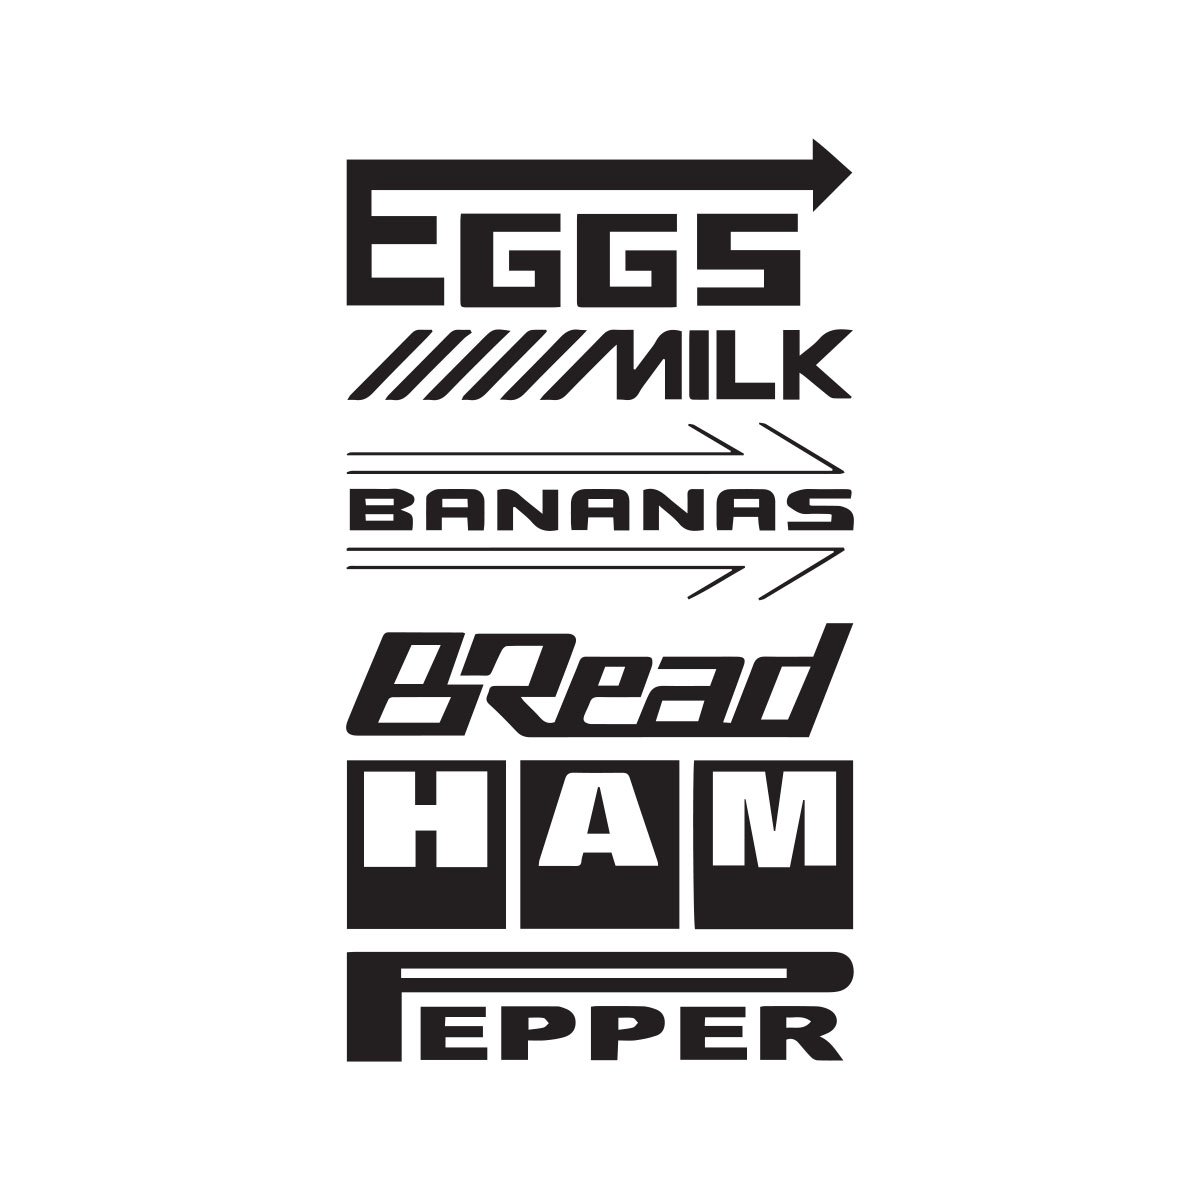 Eggs Milk Bananas Bread Ham Pepper